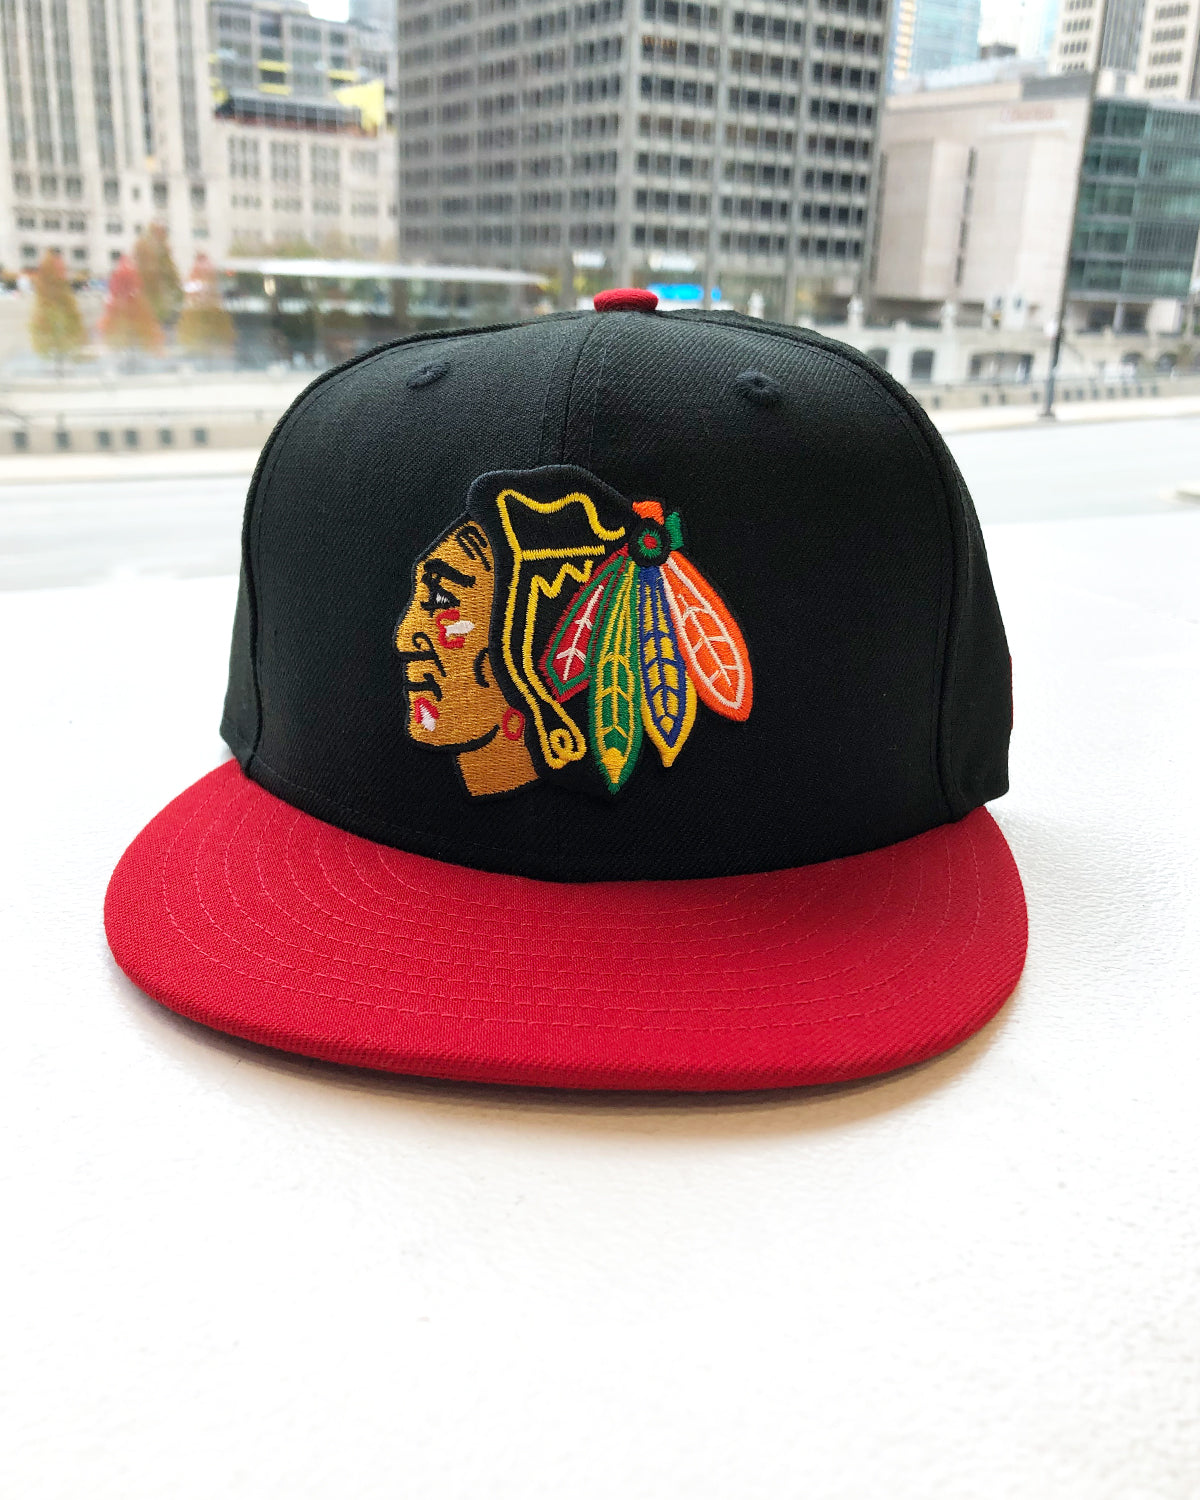 New Era 59Fifty Chicago Blackhawks Hockey Fitted Hat 7 3/8 